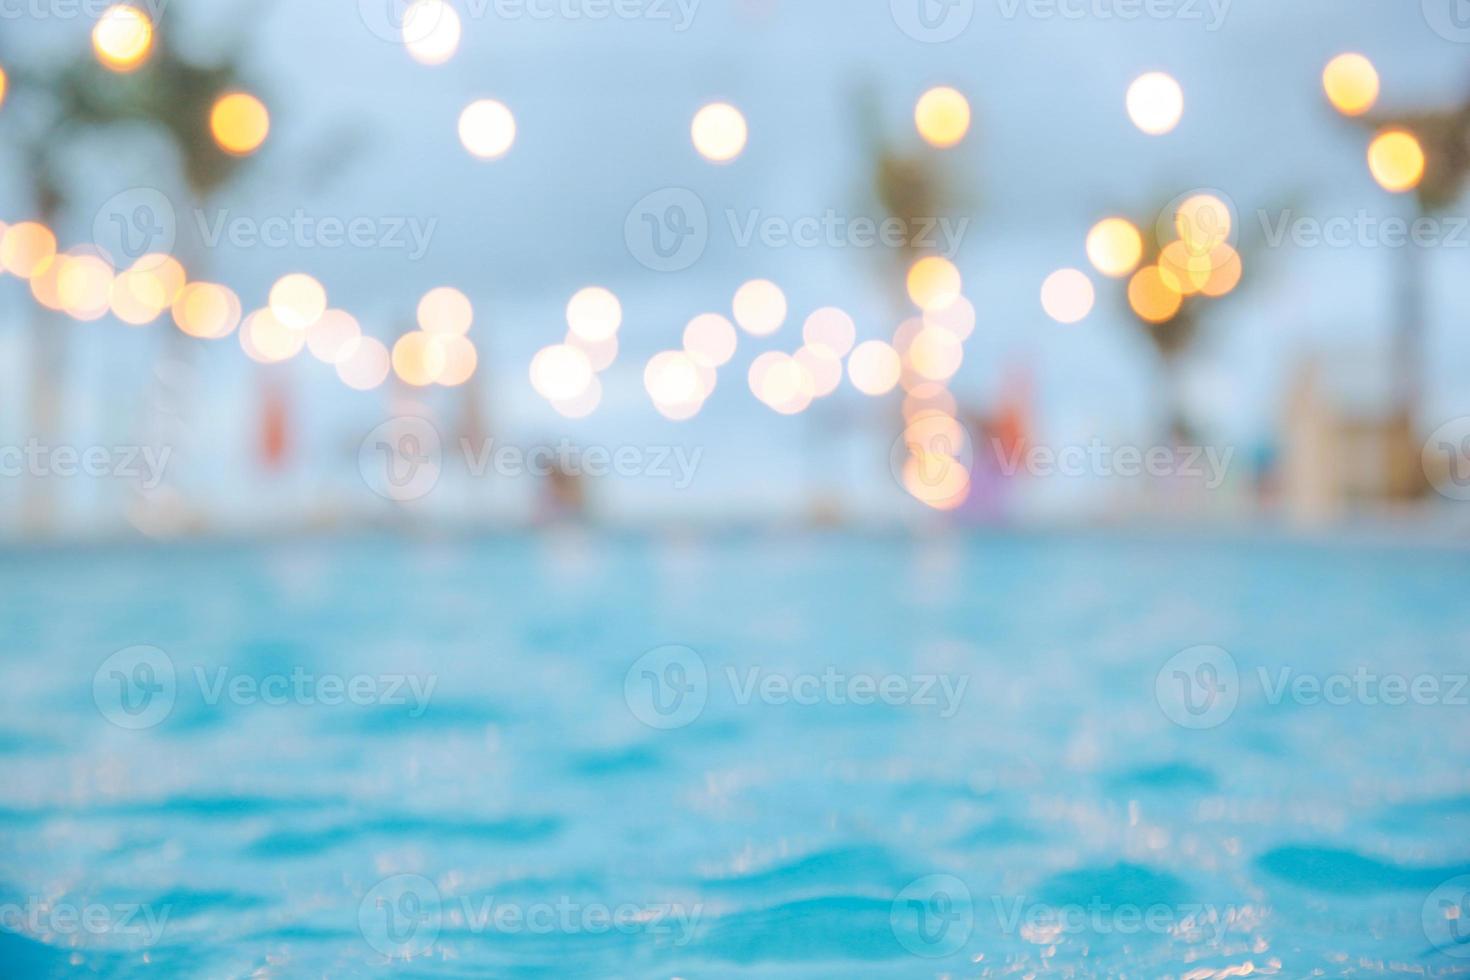 luz desfocada do bokeh no fundo abstrato da água azul da piscina do verão foto